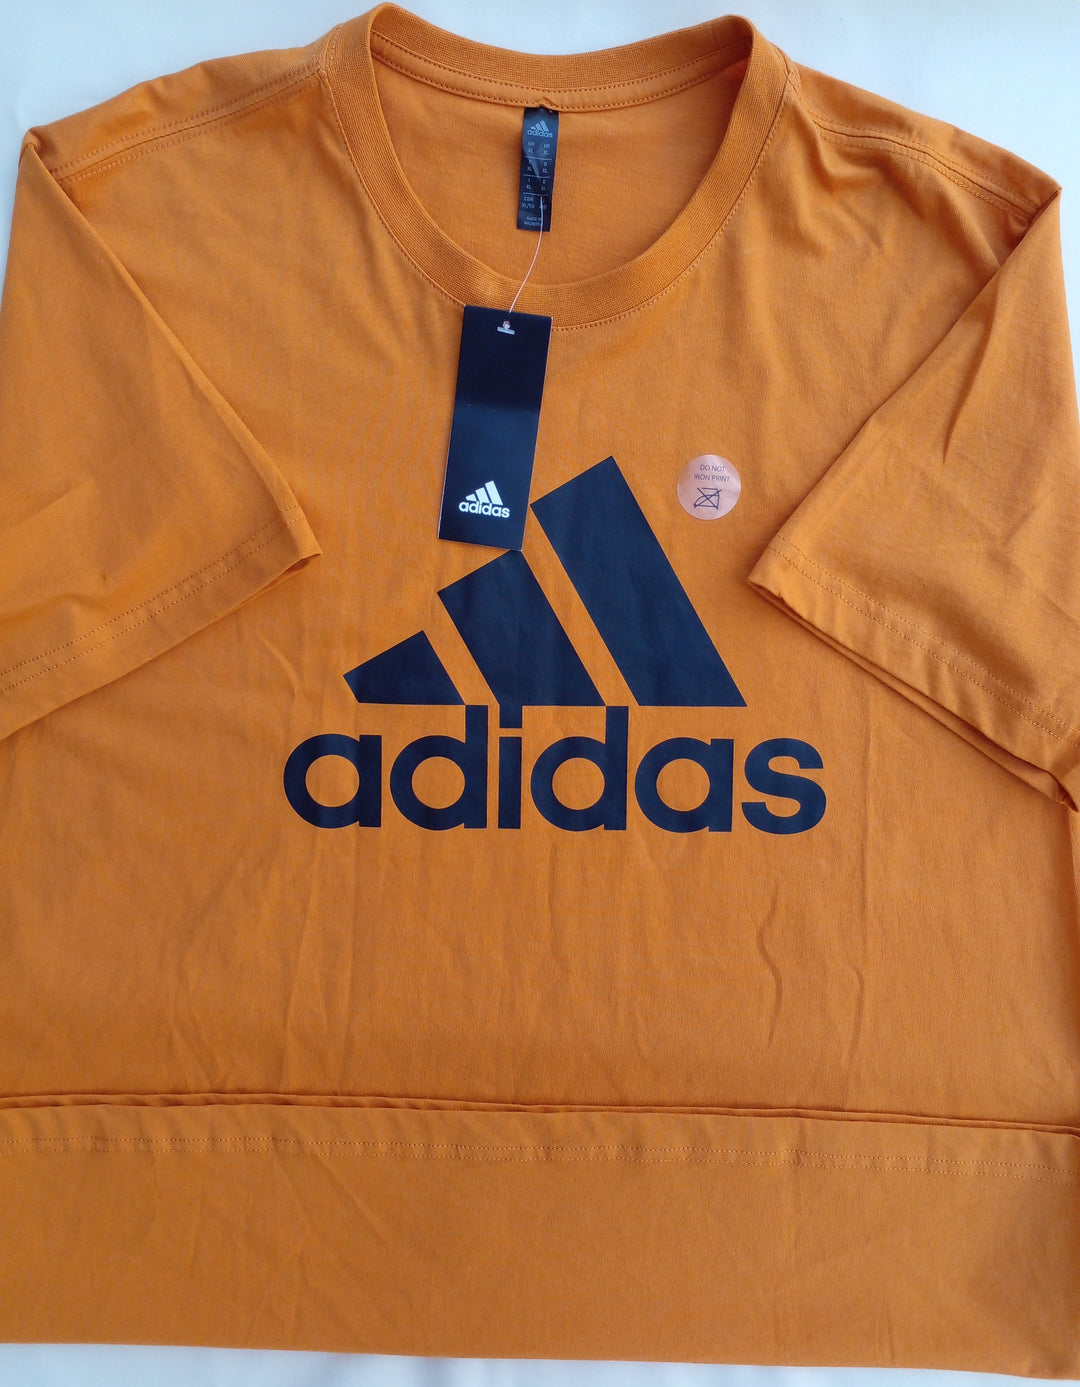 Image of Adidas classic graphic tshirt